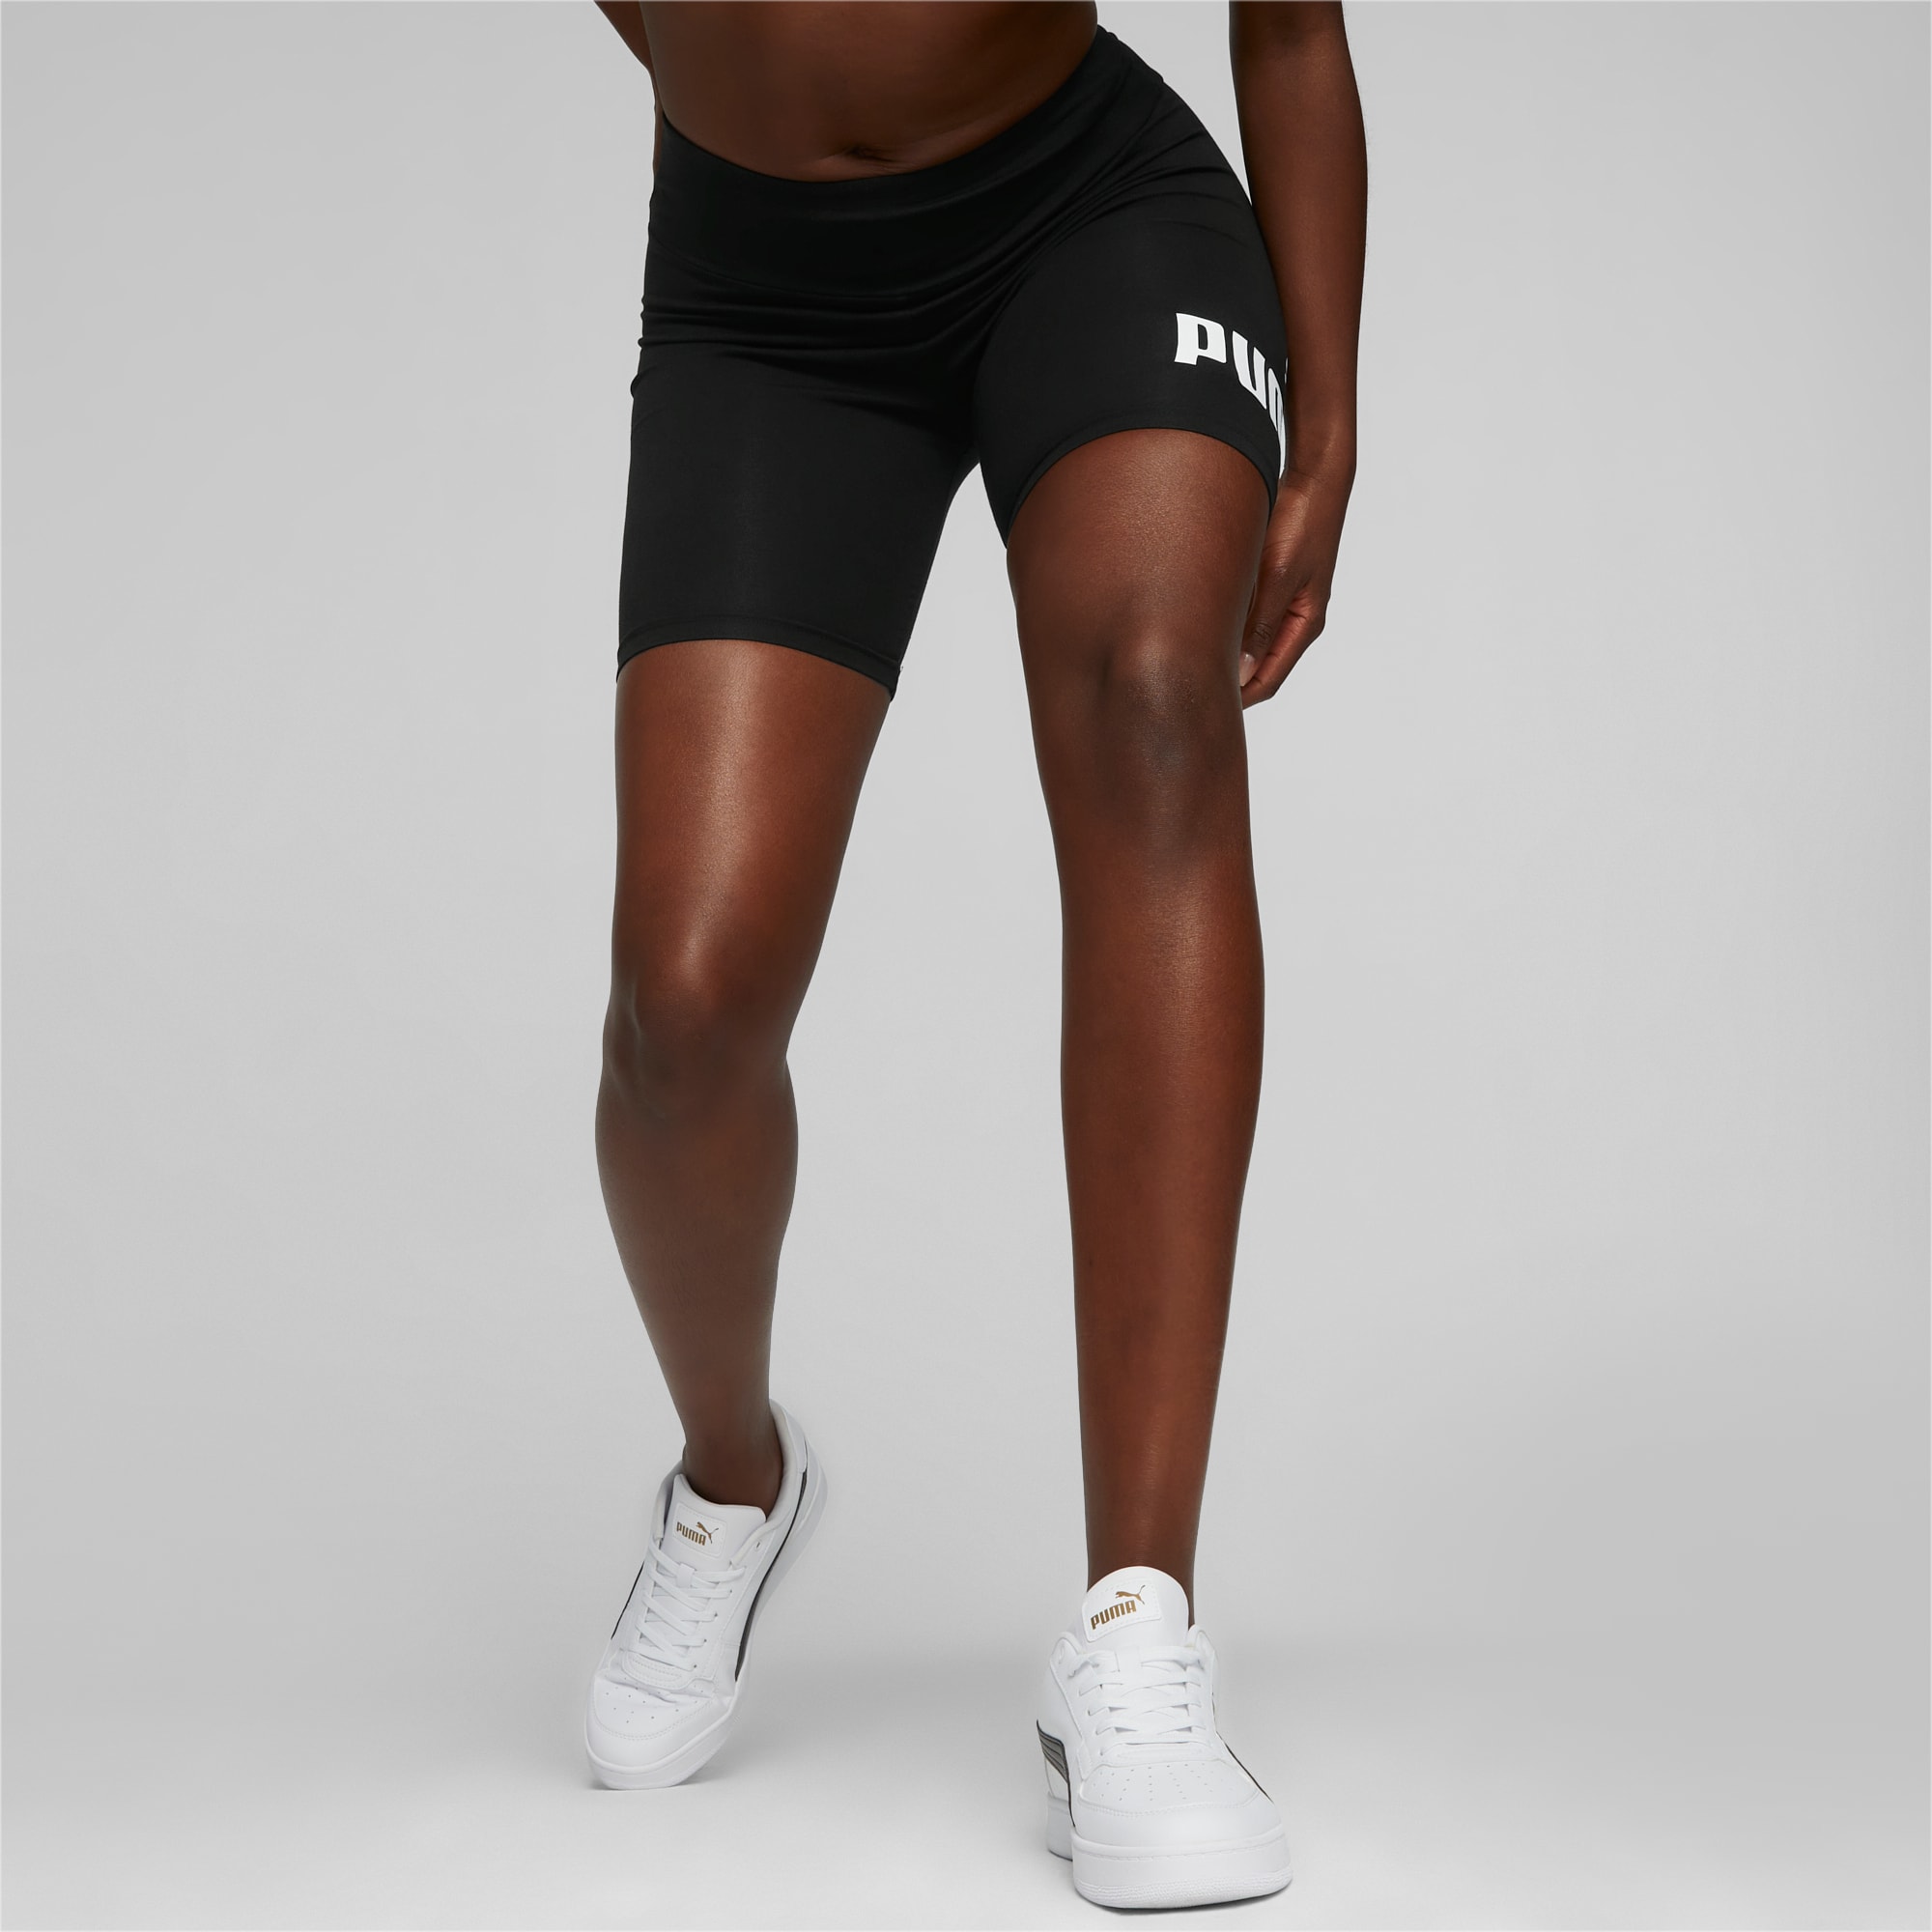 $18.99  Sport shorts, Leggings are not pants, Women